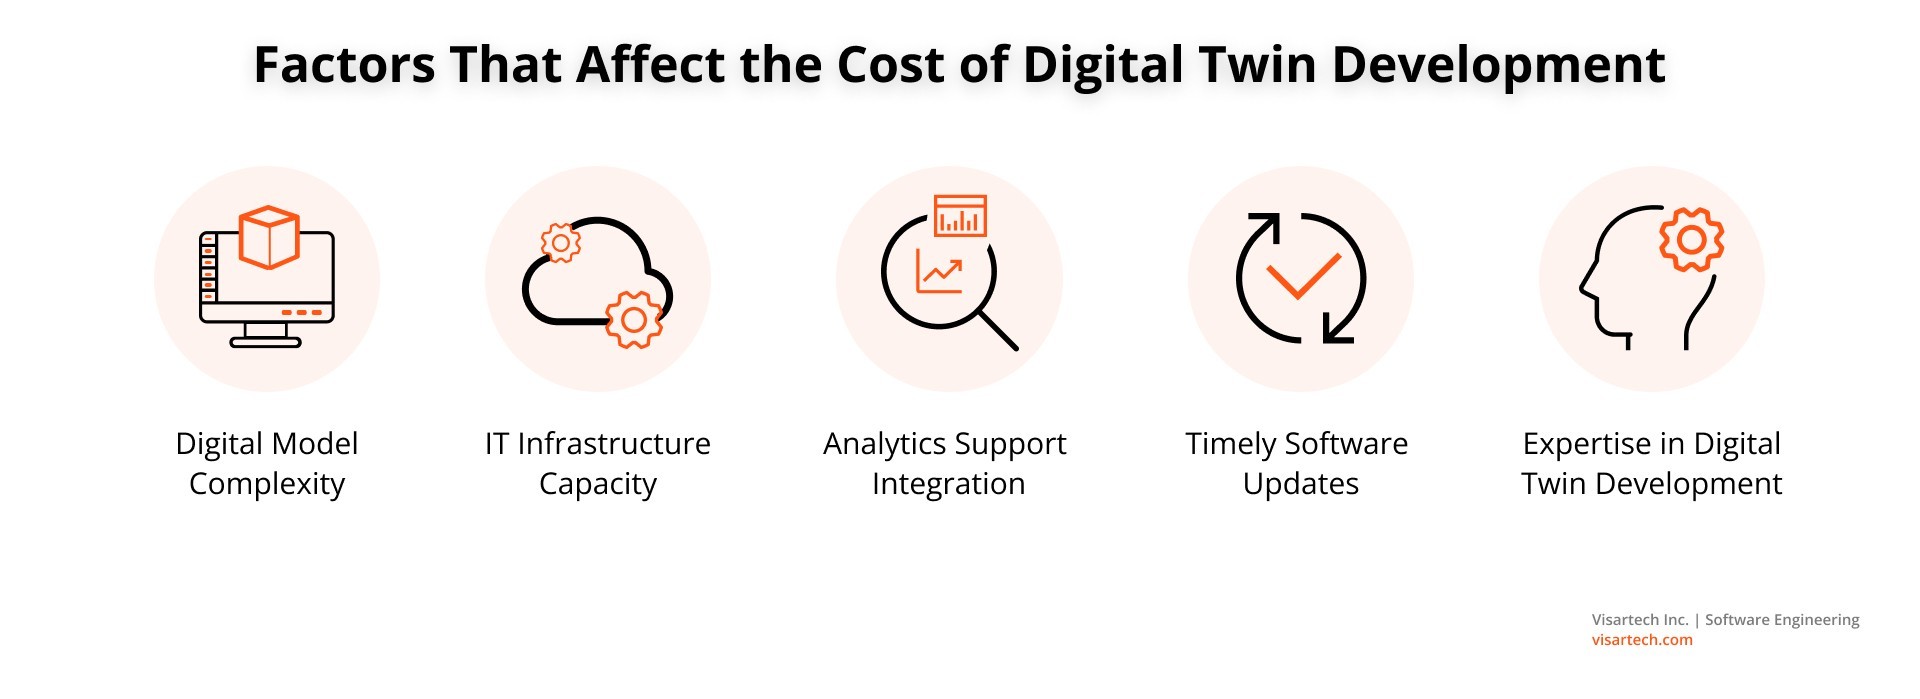 Factors That Affect the Cost of Digital Twin Development - Visartech Blog